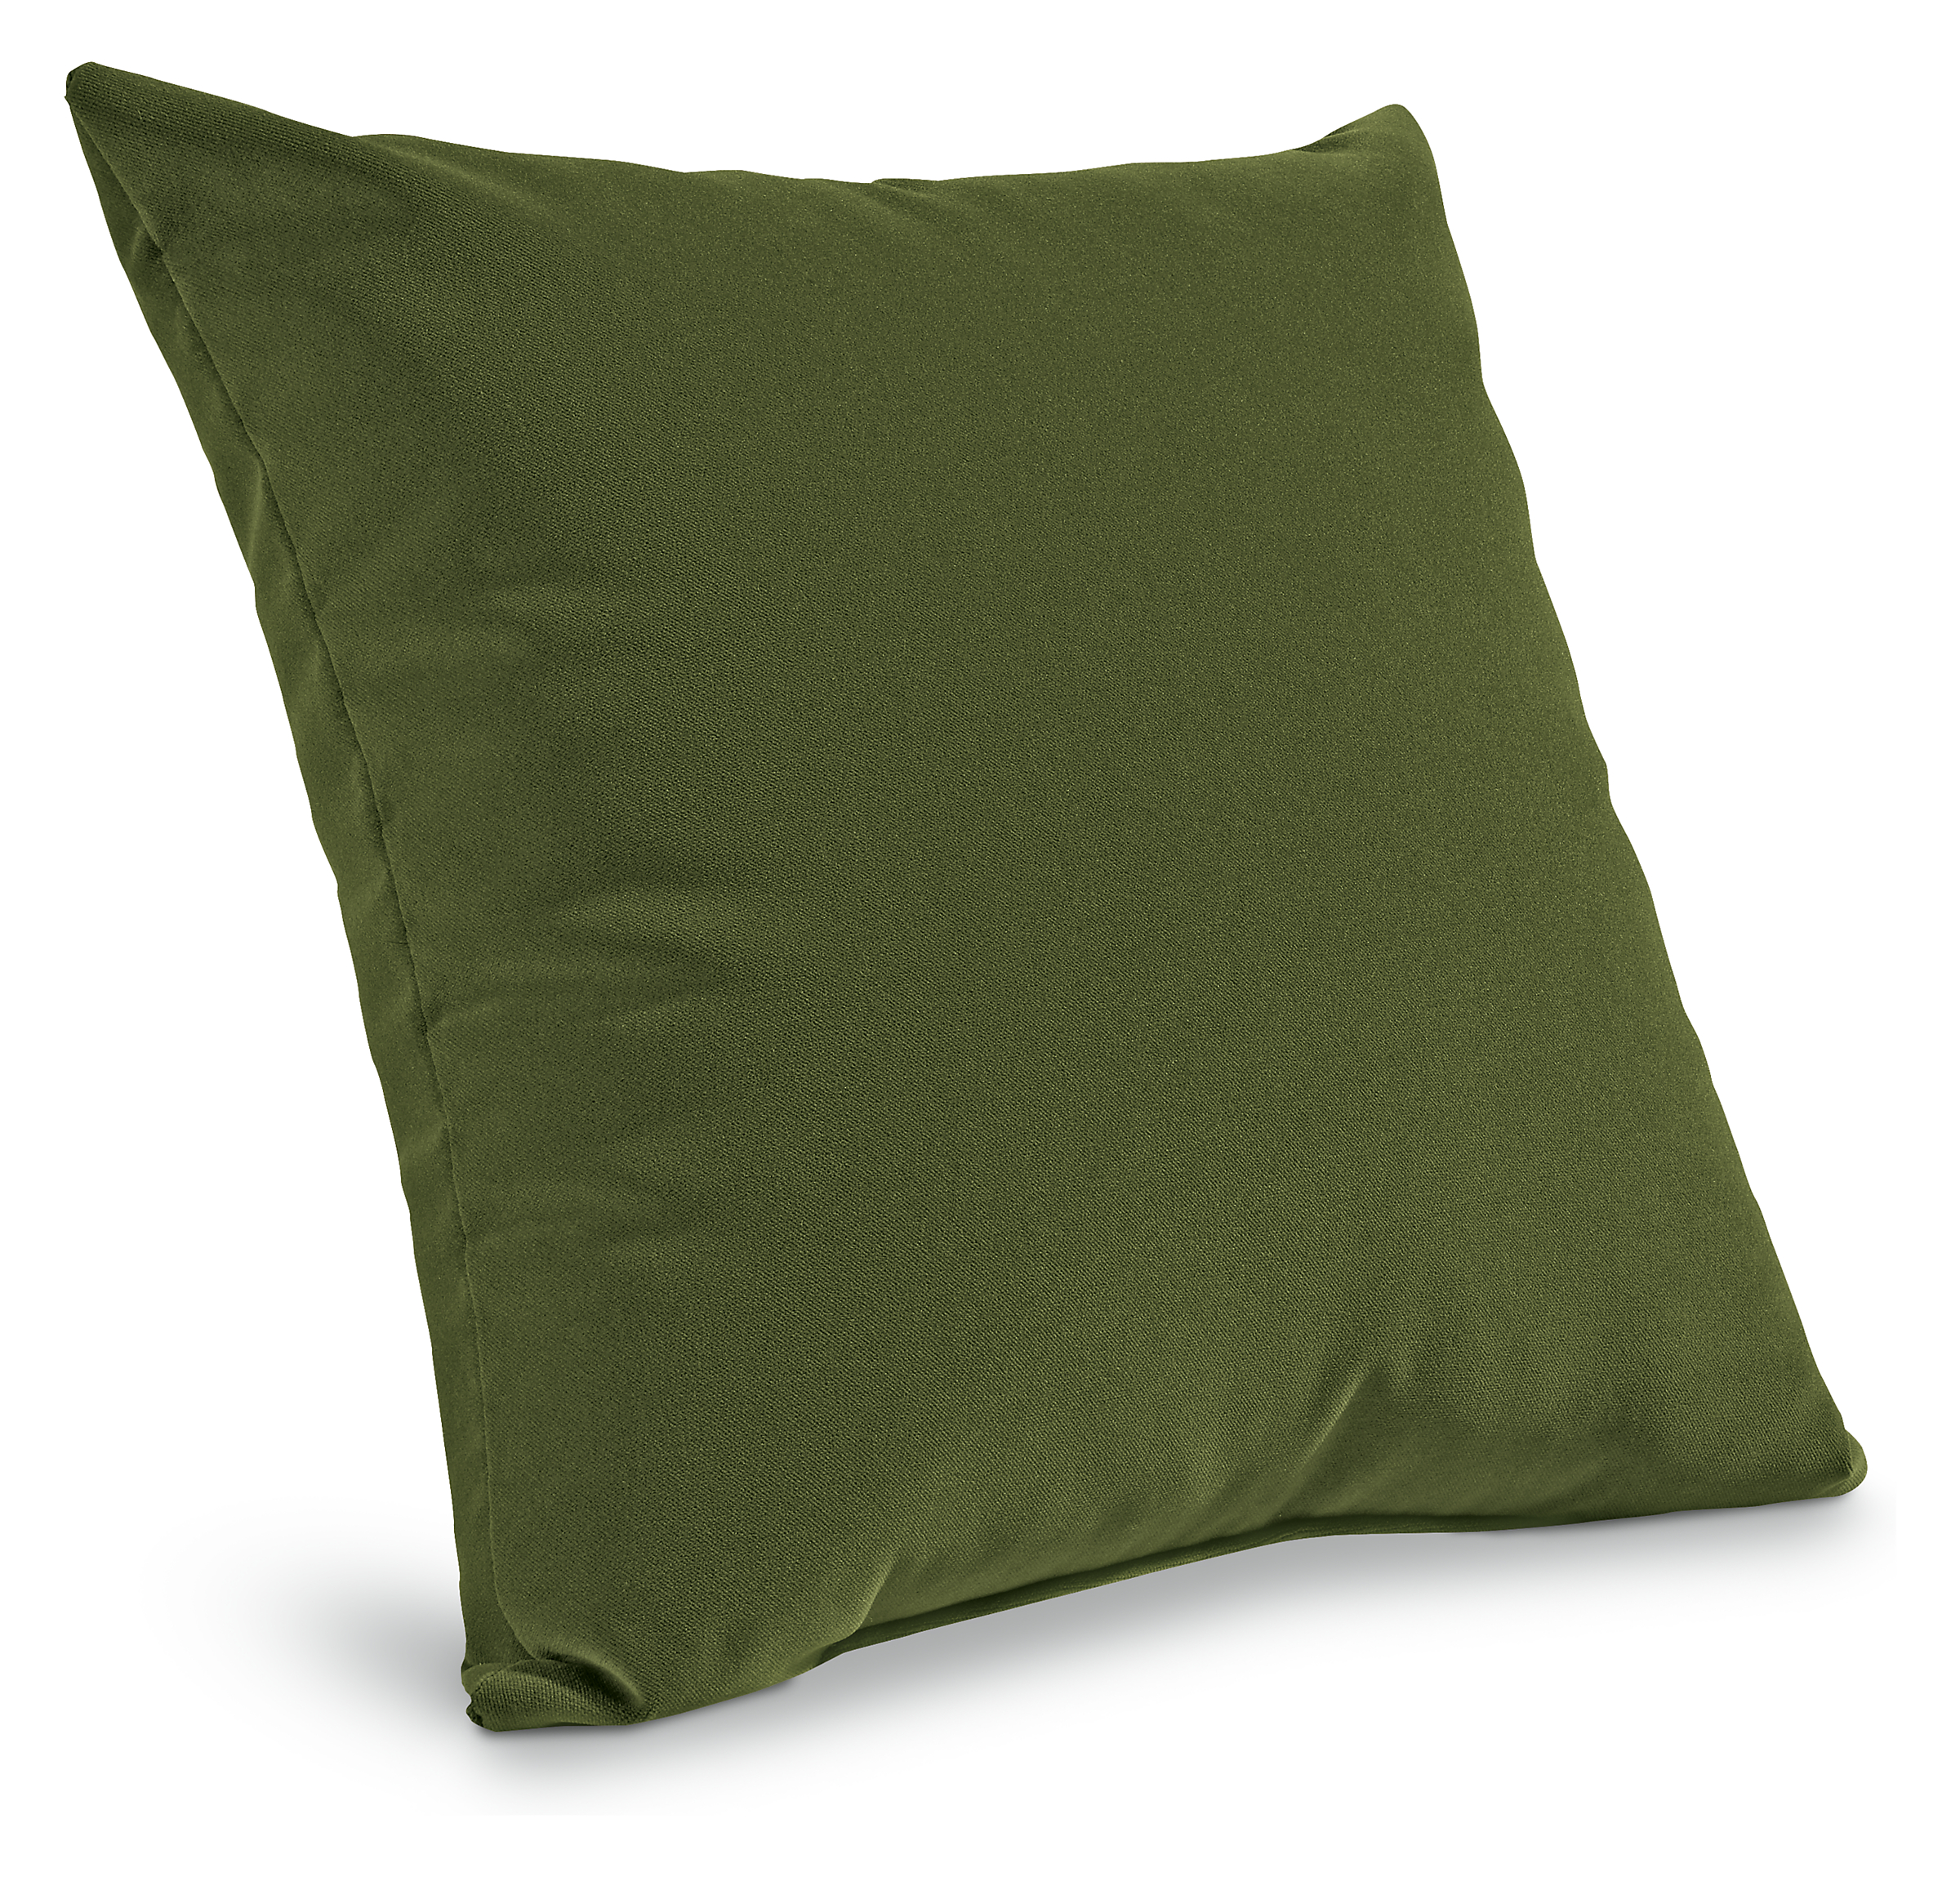 Verge 20w 20h Outdoor Pillow in Tristan Green